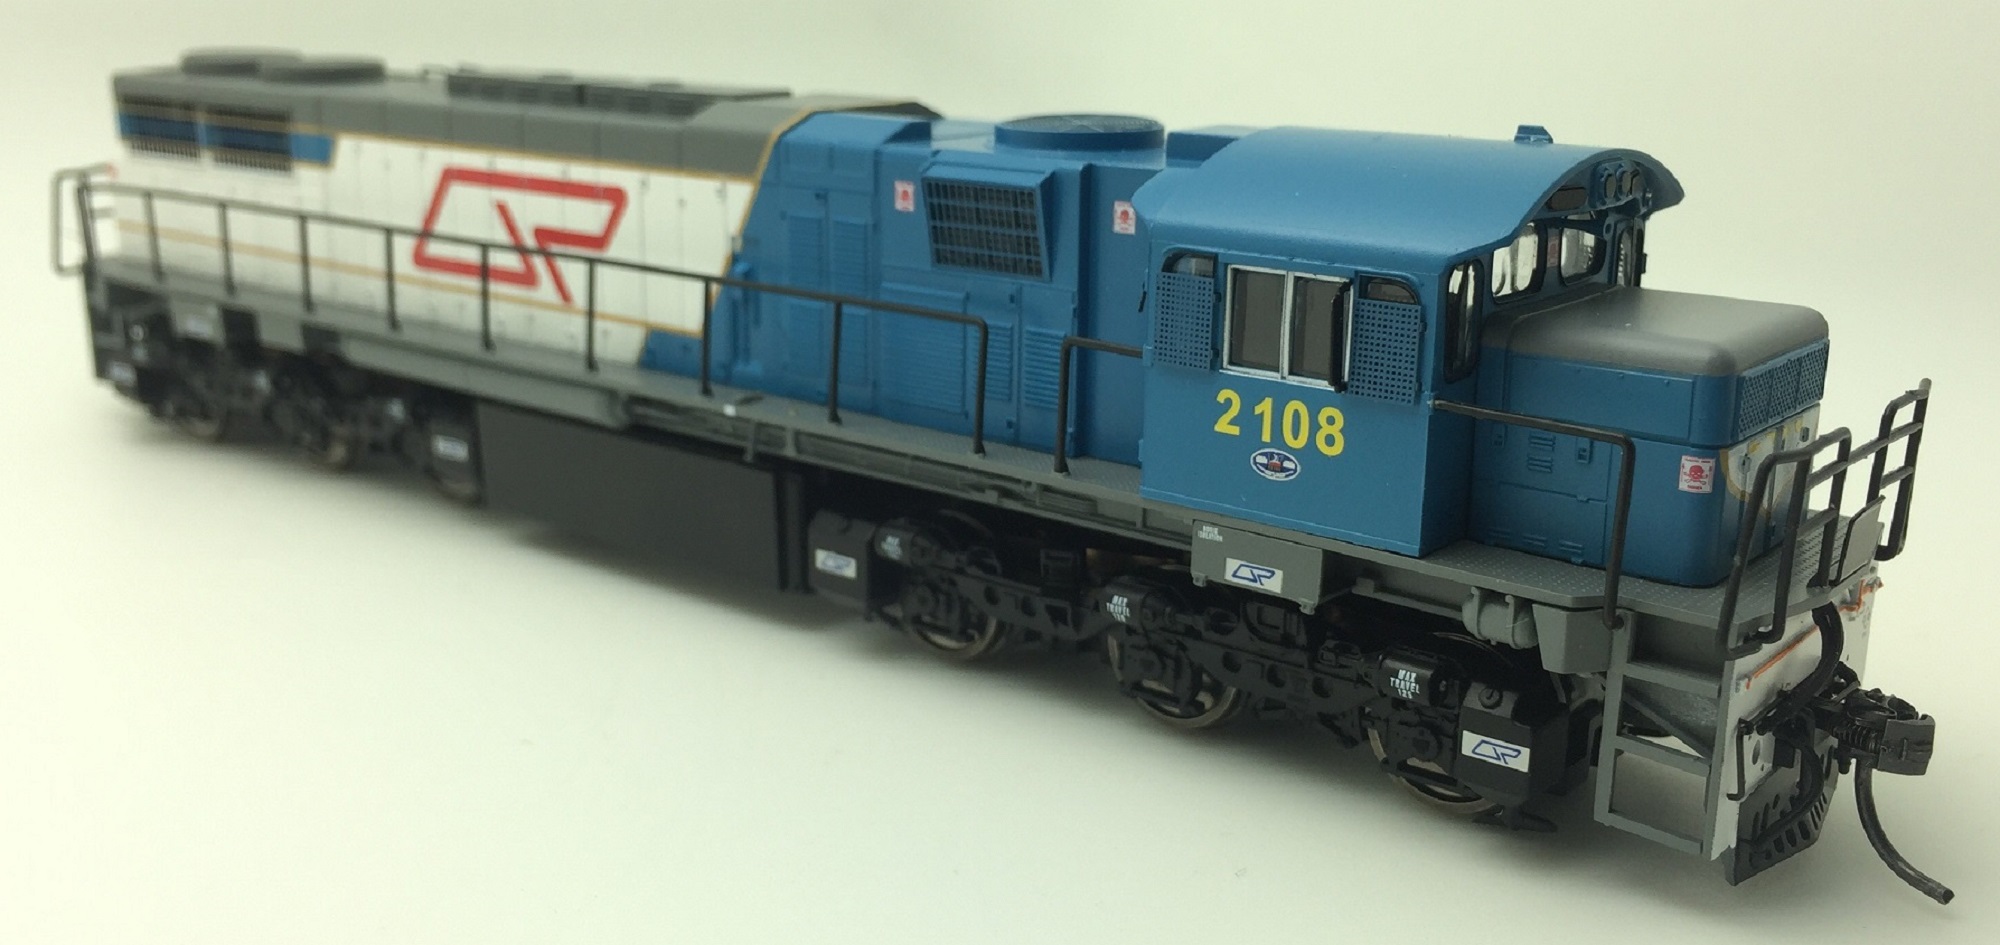 RTR061HO 2100 Class Locomotive #2108 HO (16.5mm Gauge)